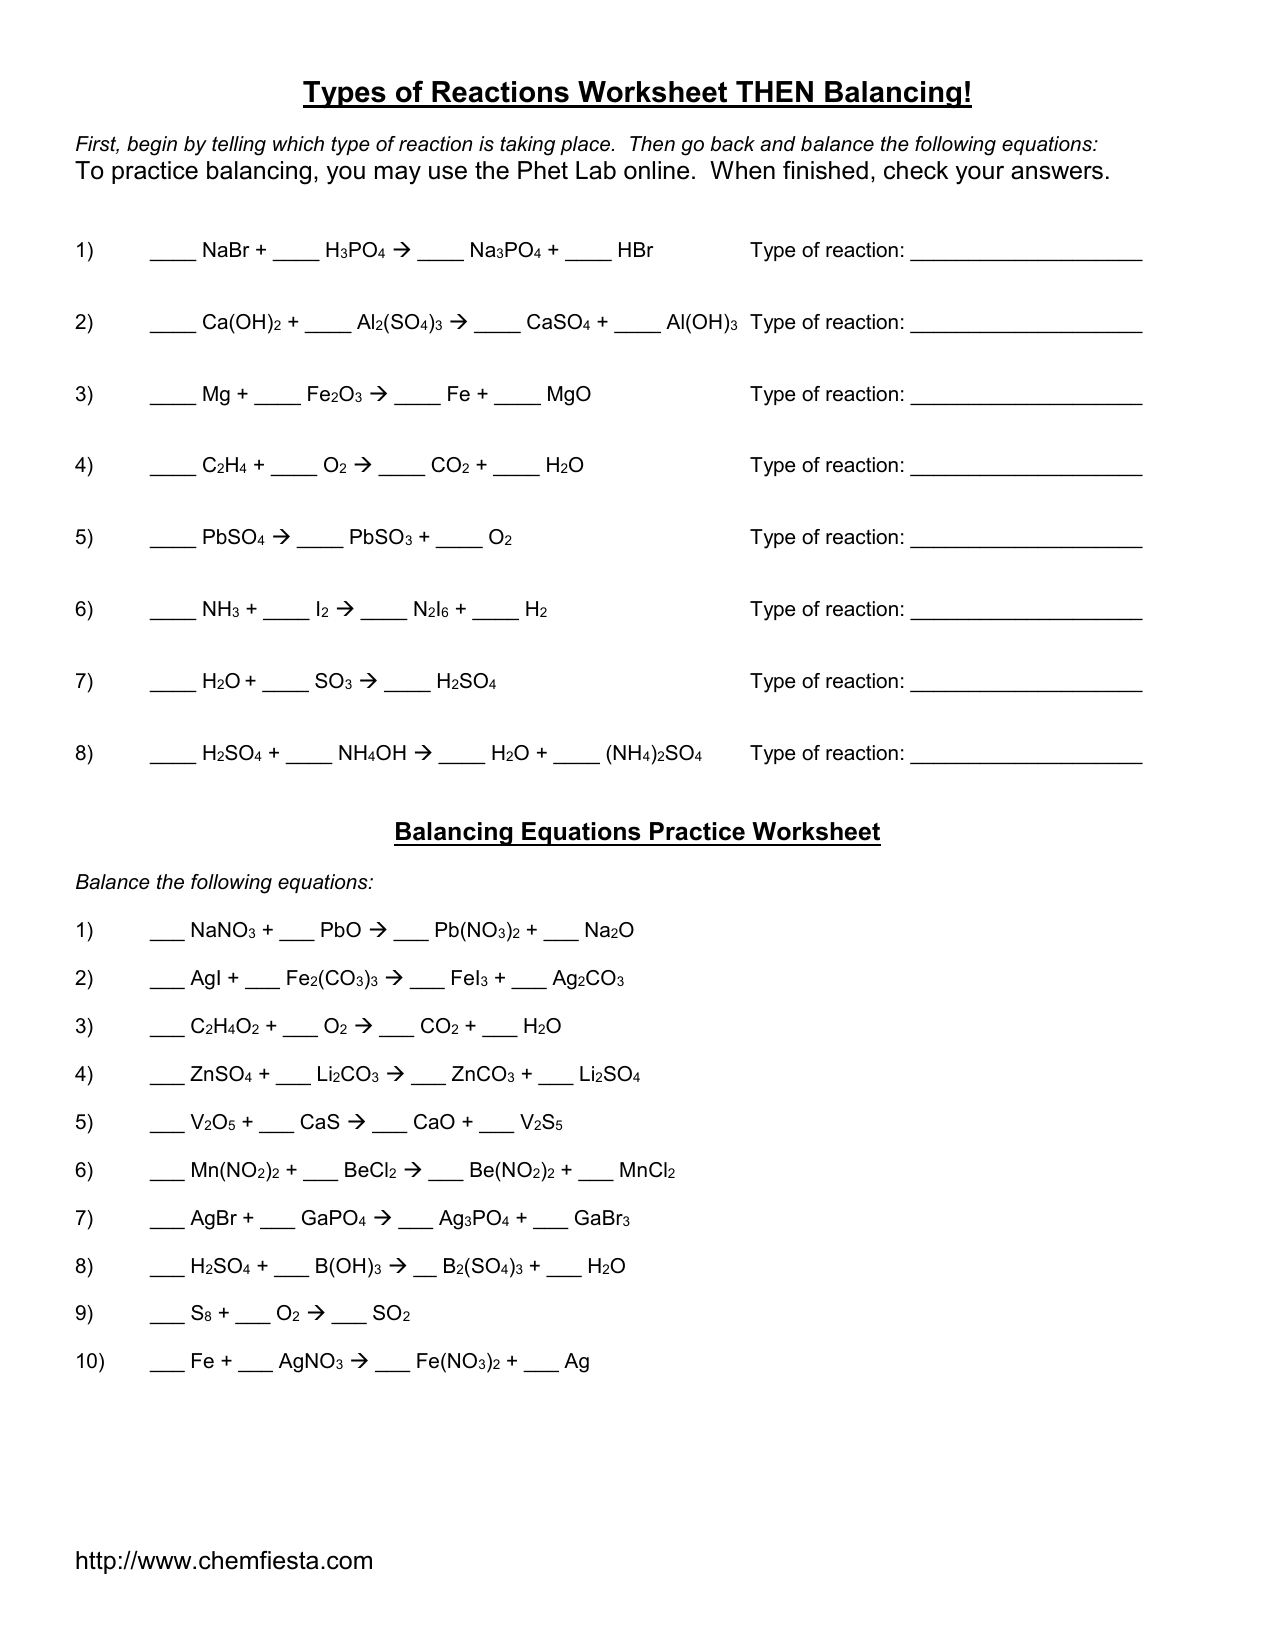 Balancing Equations Practice Worksheet In Types Of Reactions Worksheet